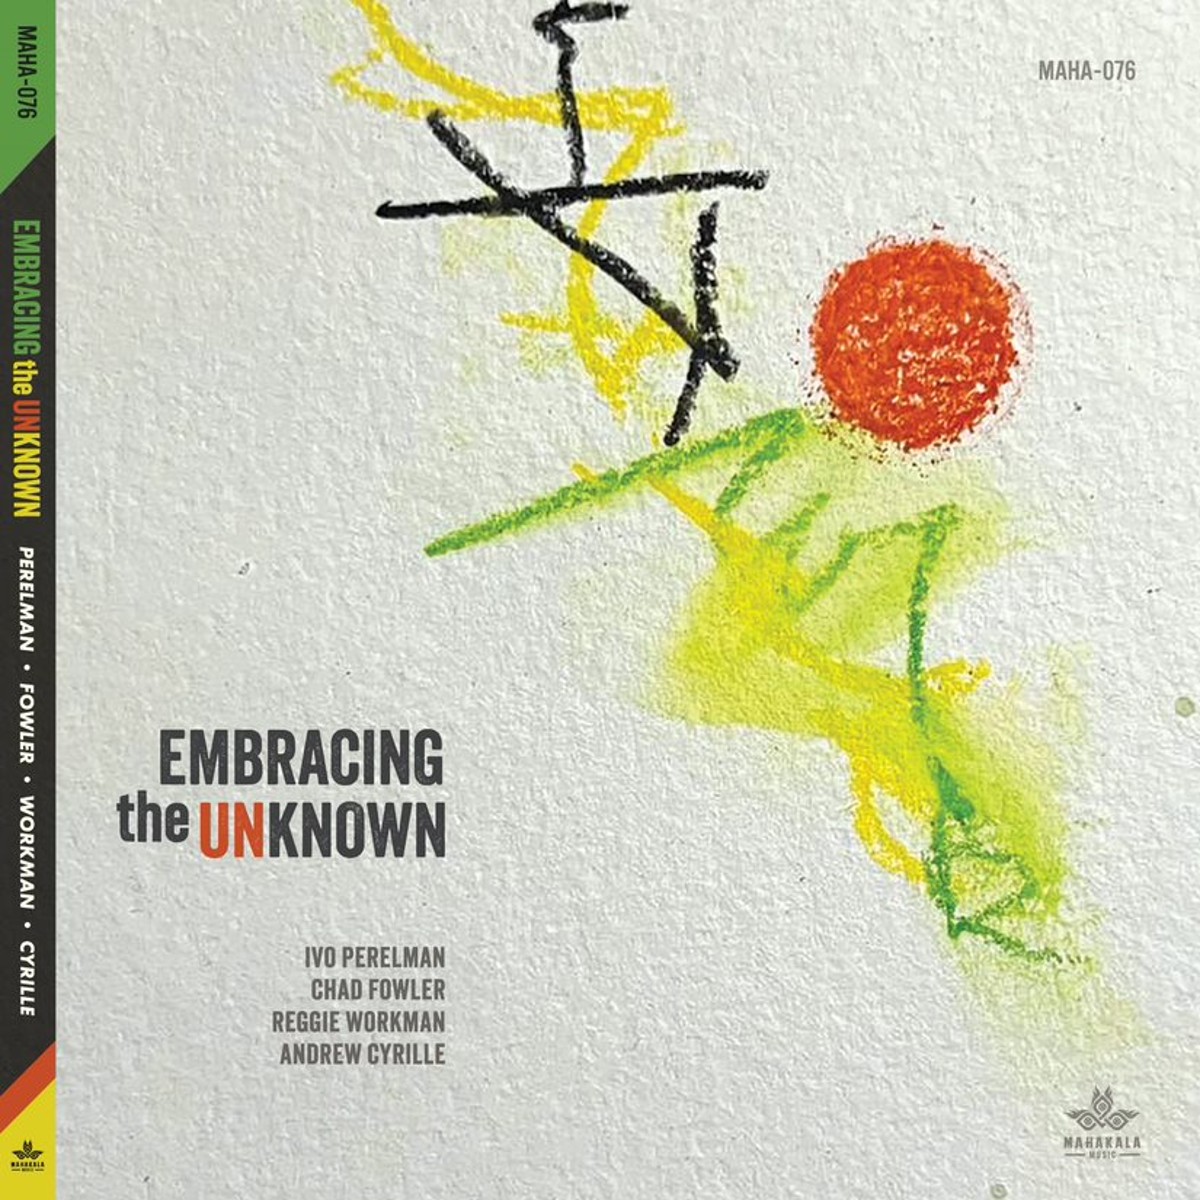 Ivo Perelman, Chad Fowler, Reggie Workman, Andrew Cyrille ‘Embracing the Unknown’ album artwork